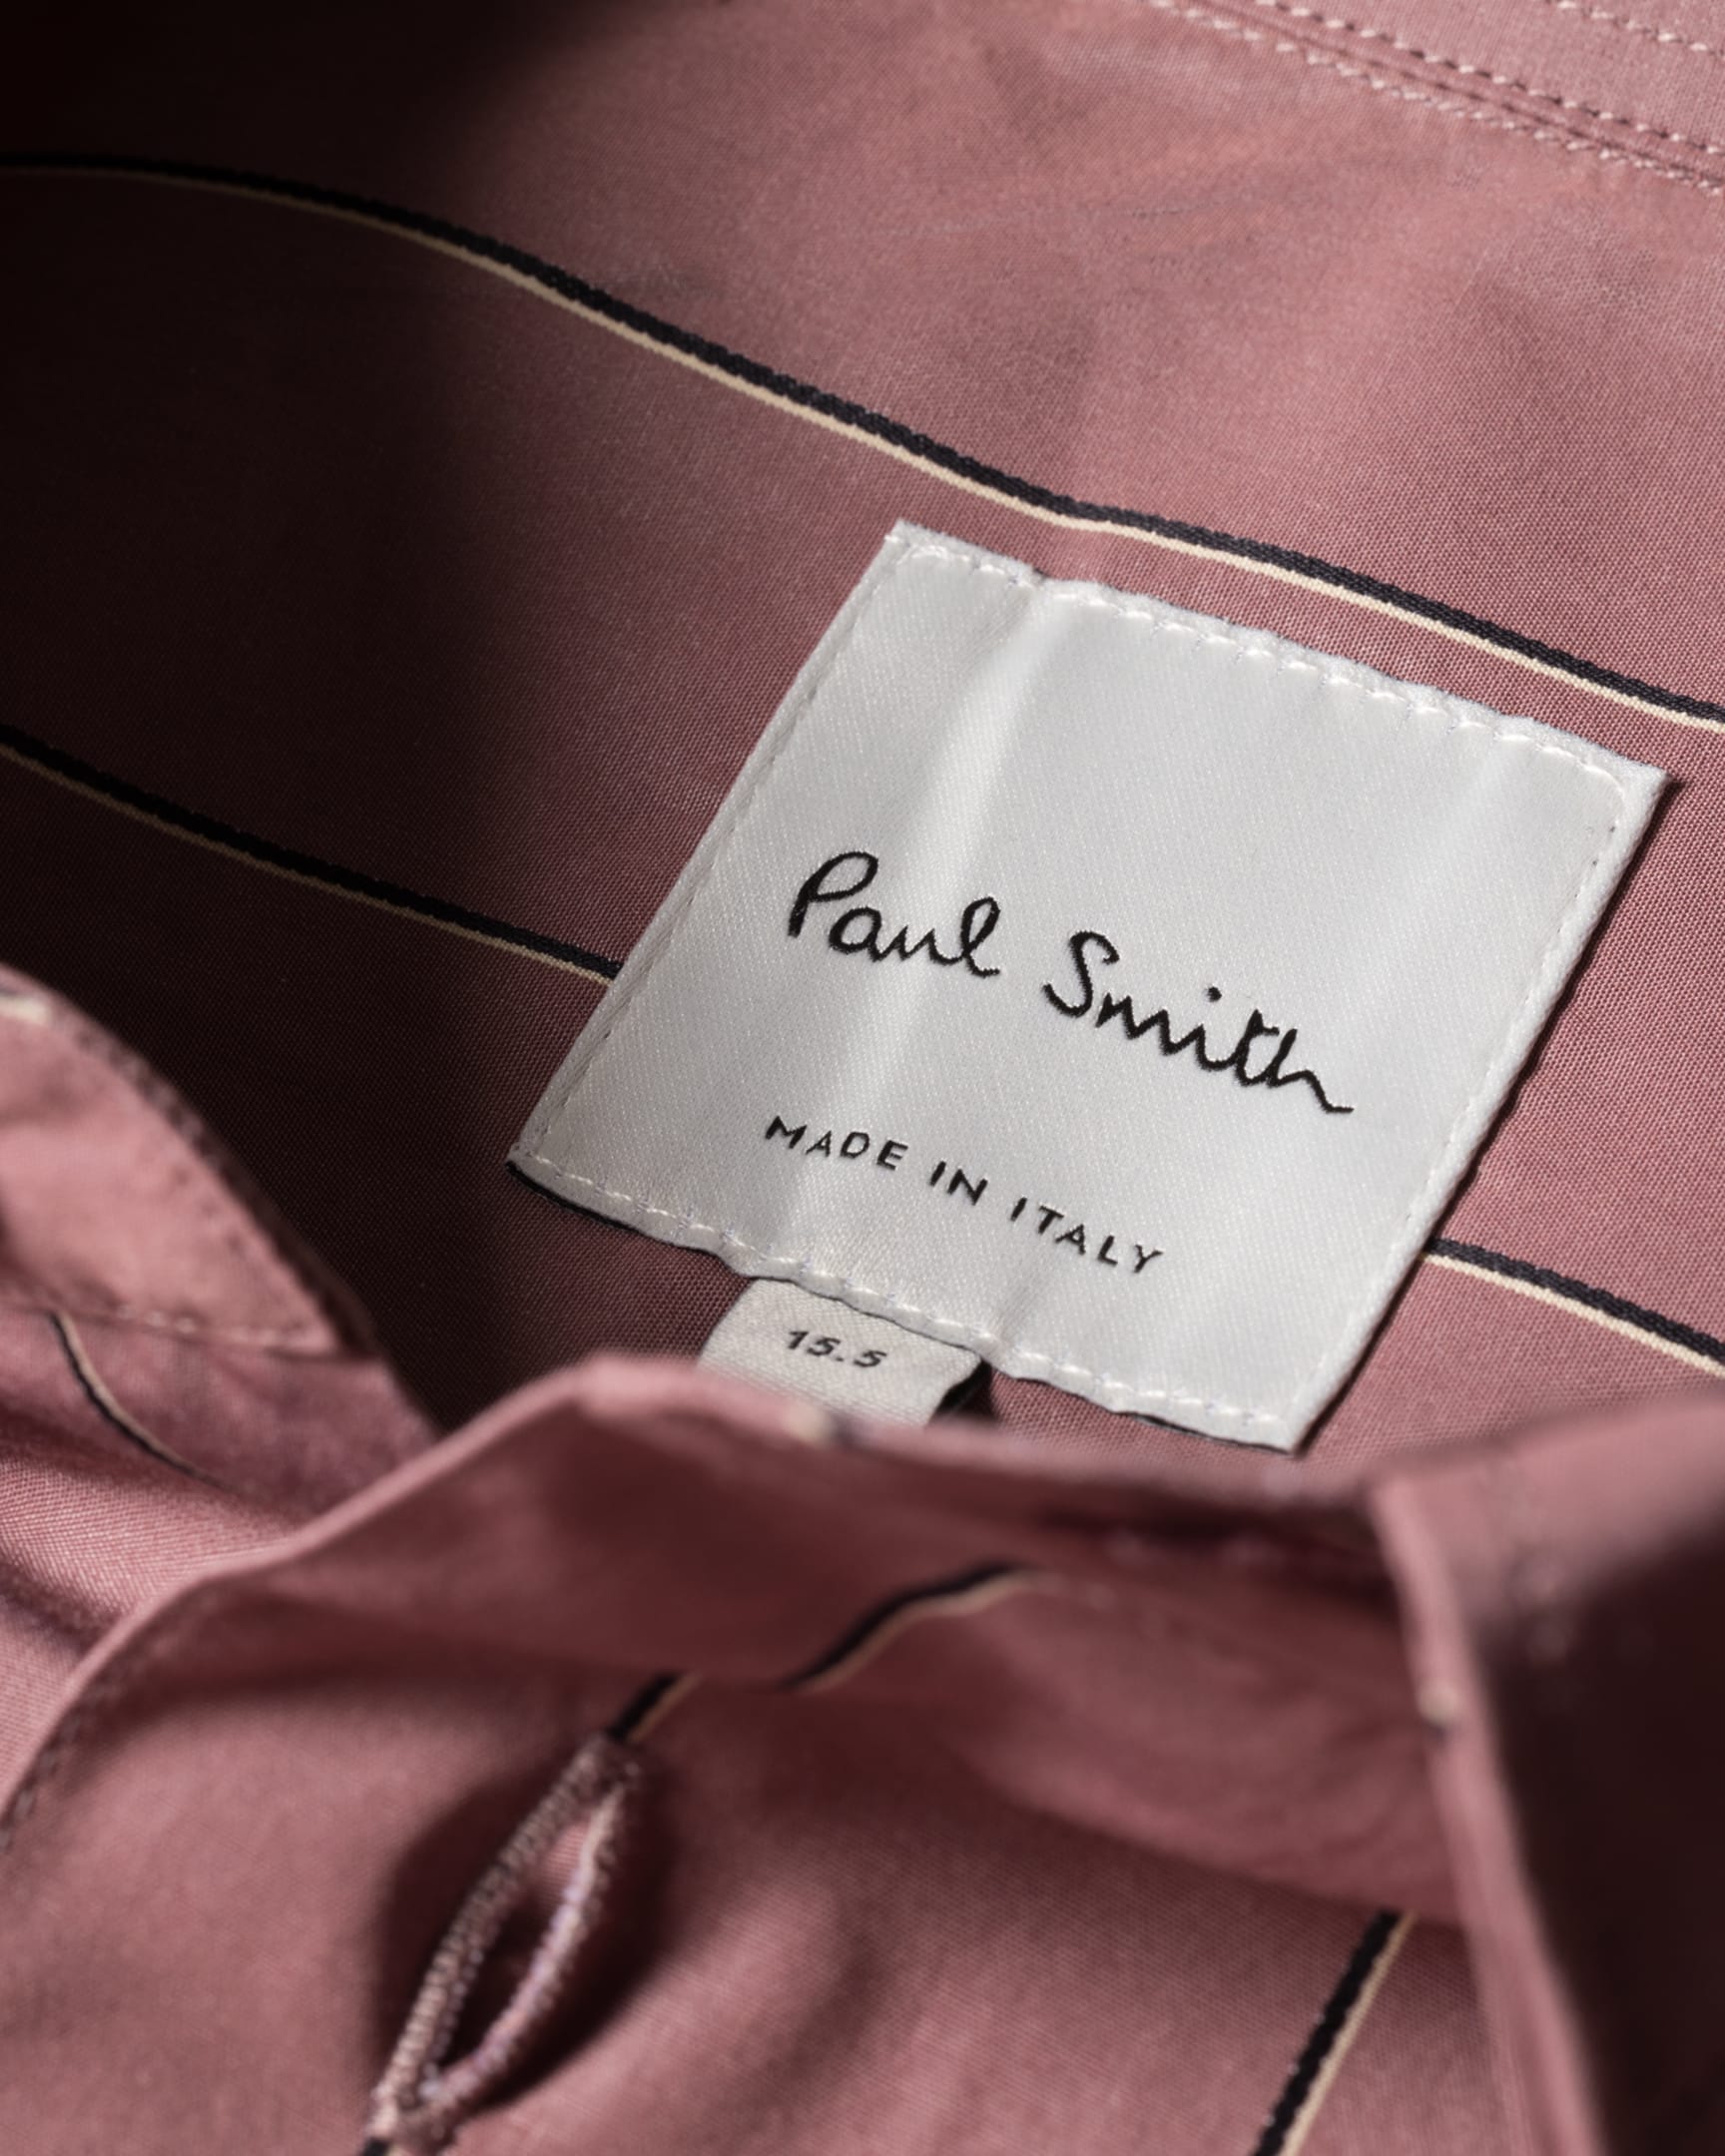 Detail View - Dusky Pink Oversized Stripe Cotton Shirt Paul Smith